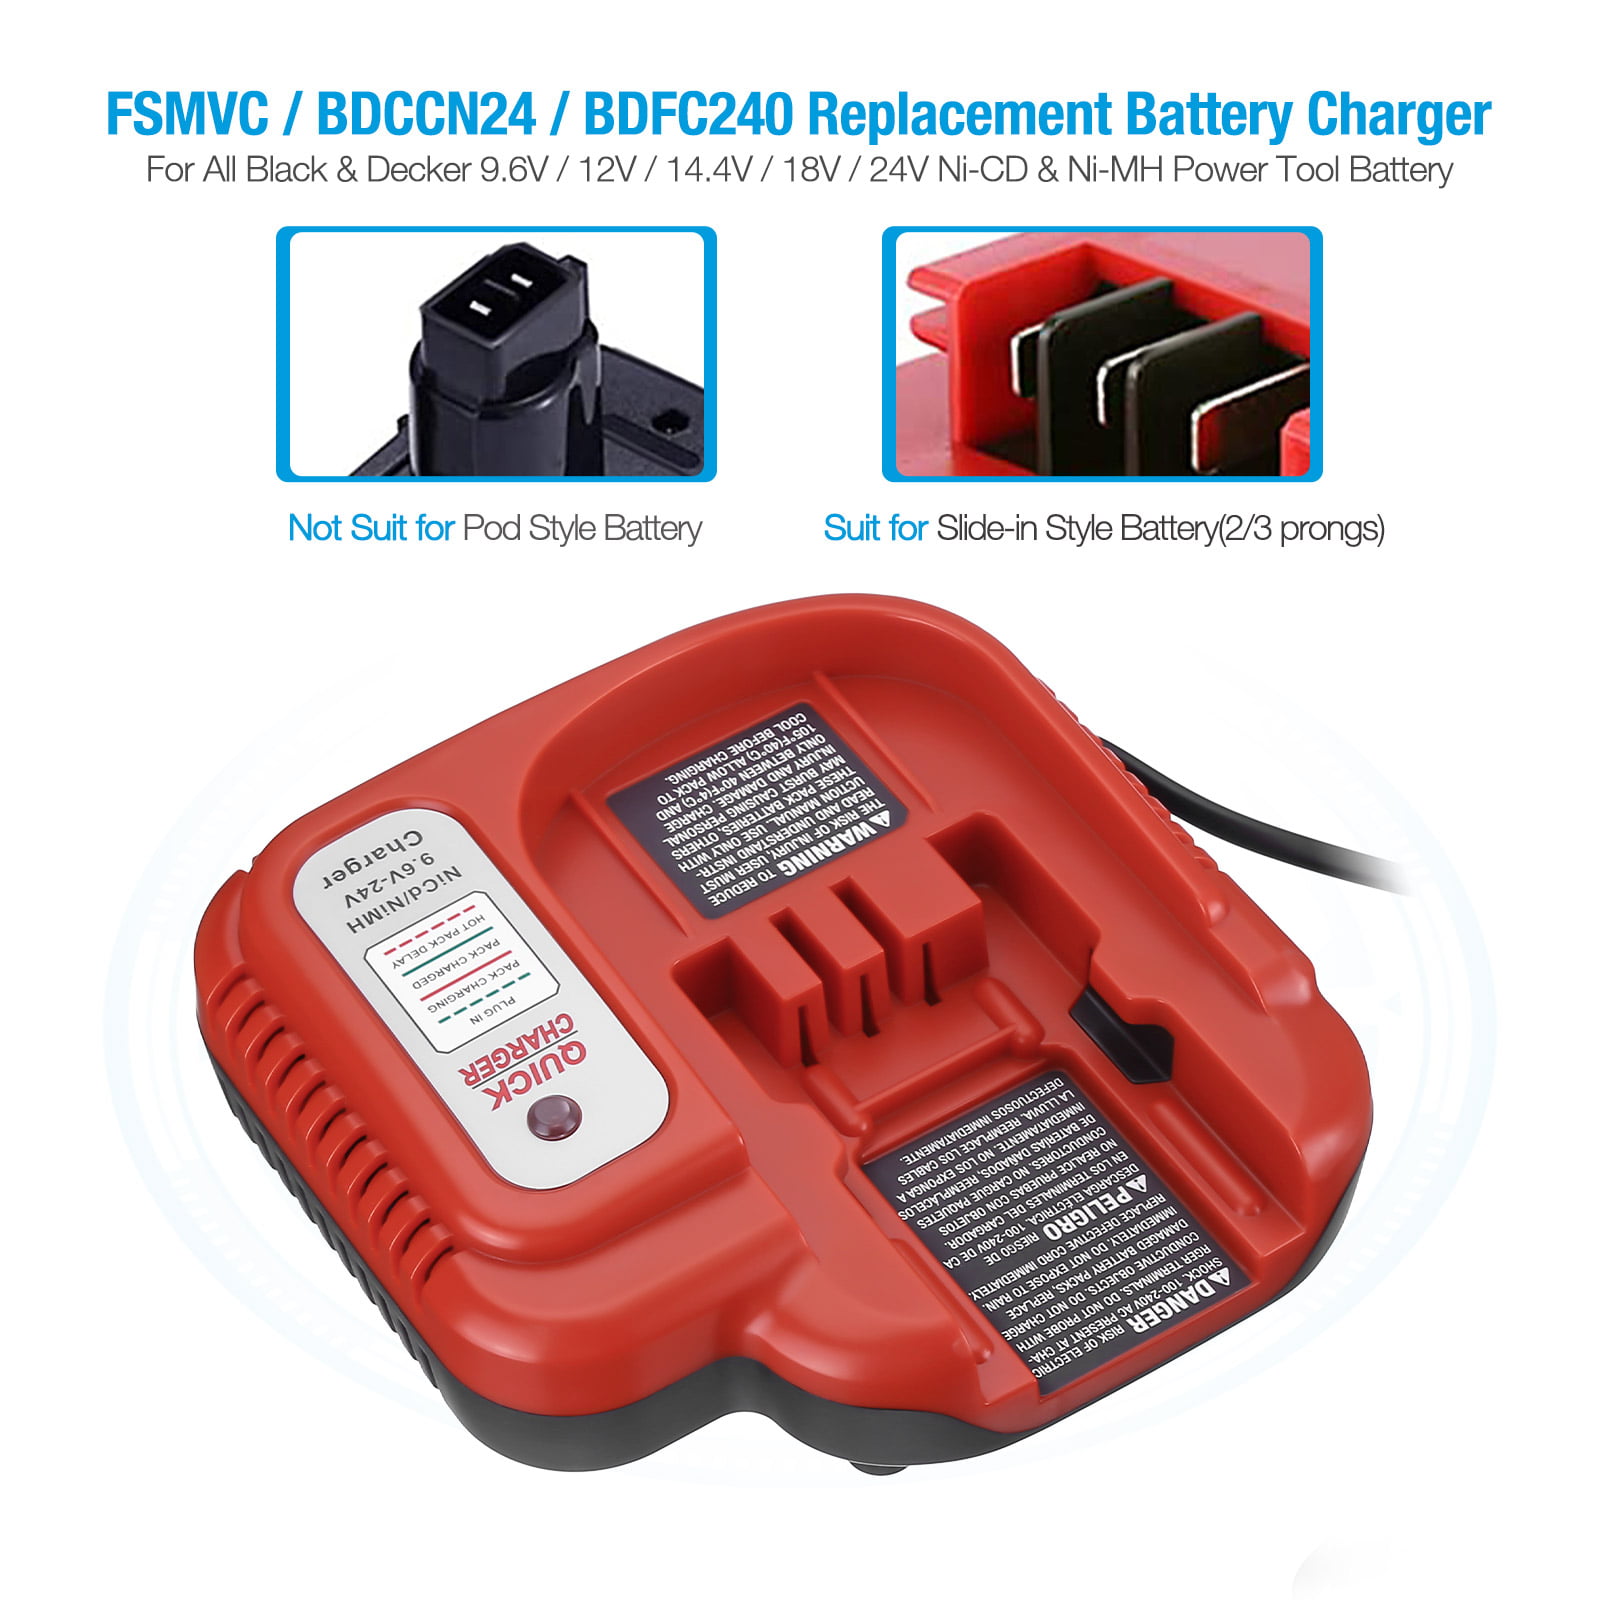 Powerextra 2-Pack 3000mAh 18V Replacement Battery for Black & Decker HPB18  HPB18-OPE 244760-00 A1718 FS18FL FSB18 Firestorm Black and Decker 18 Volt